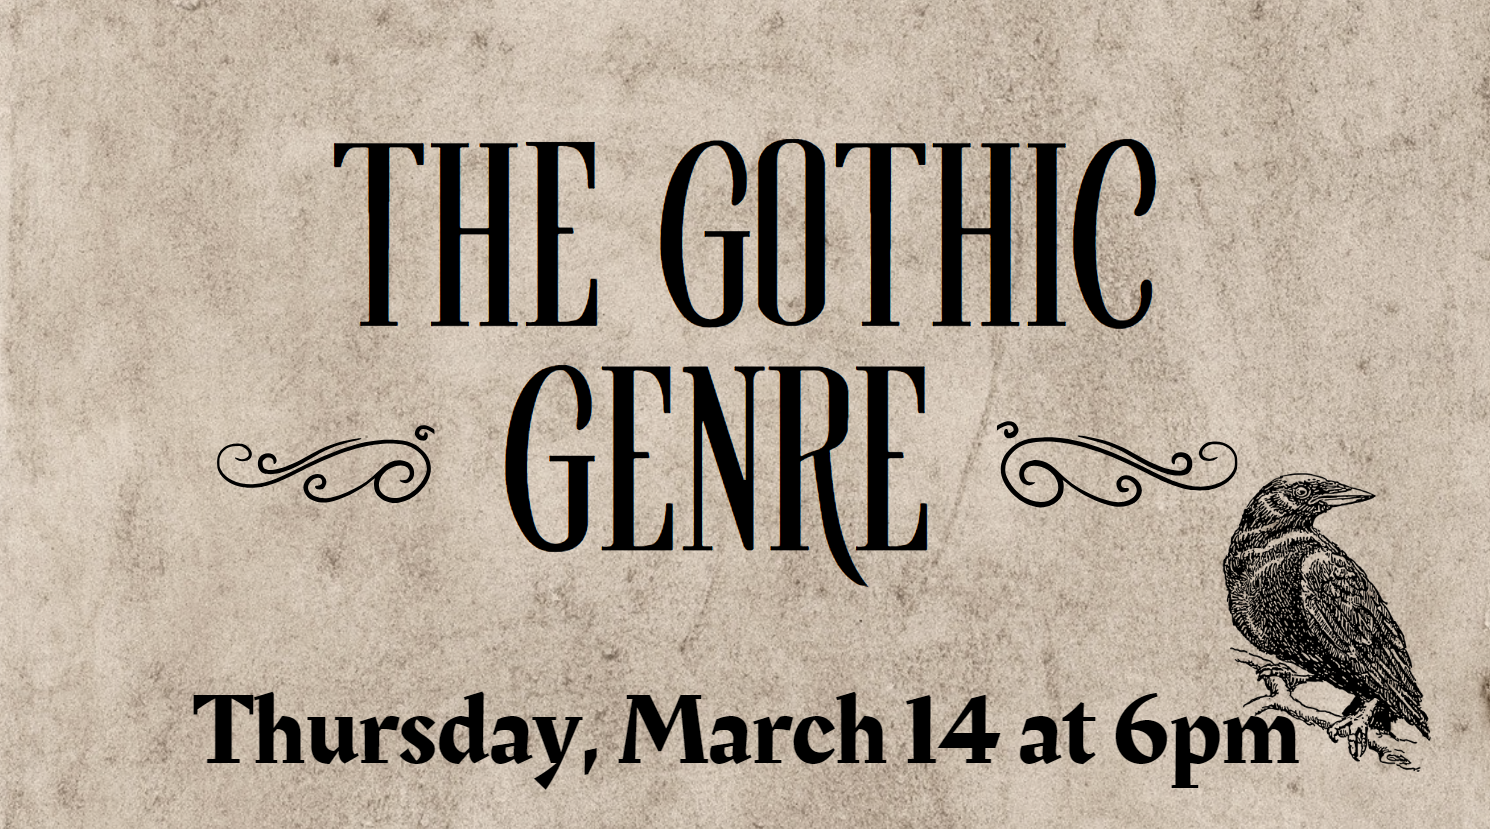 Gothic Genre on manuscript background